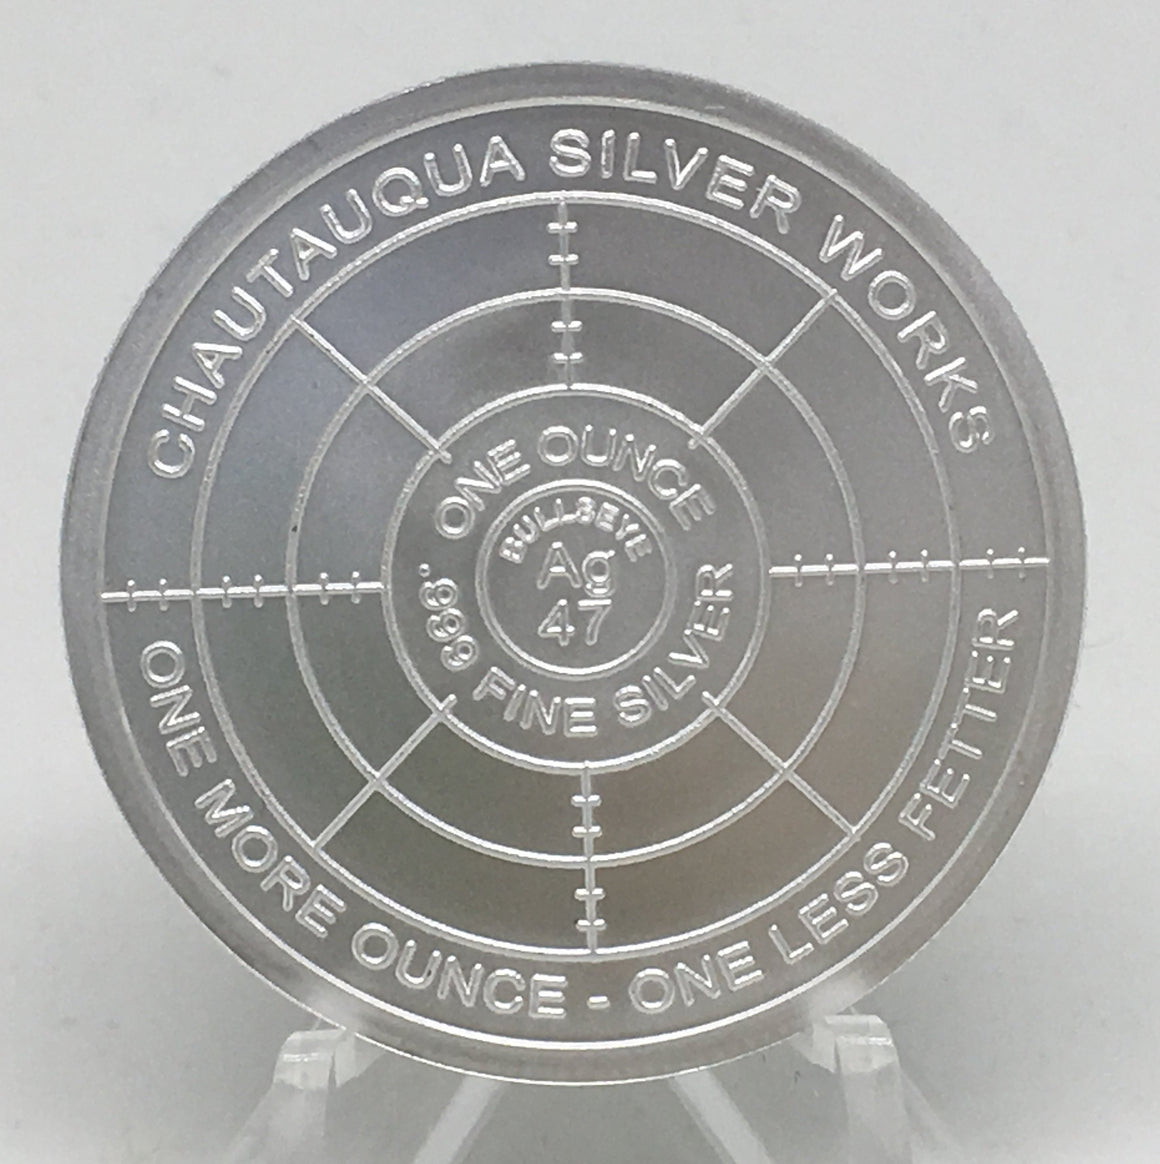 Cryptic Silver Series #9 - Cryptic Deja Vu, BU Finish by Chautauqua Silver Works, 1oz .999 Silver Round.